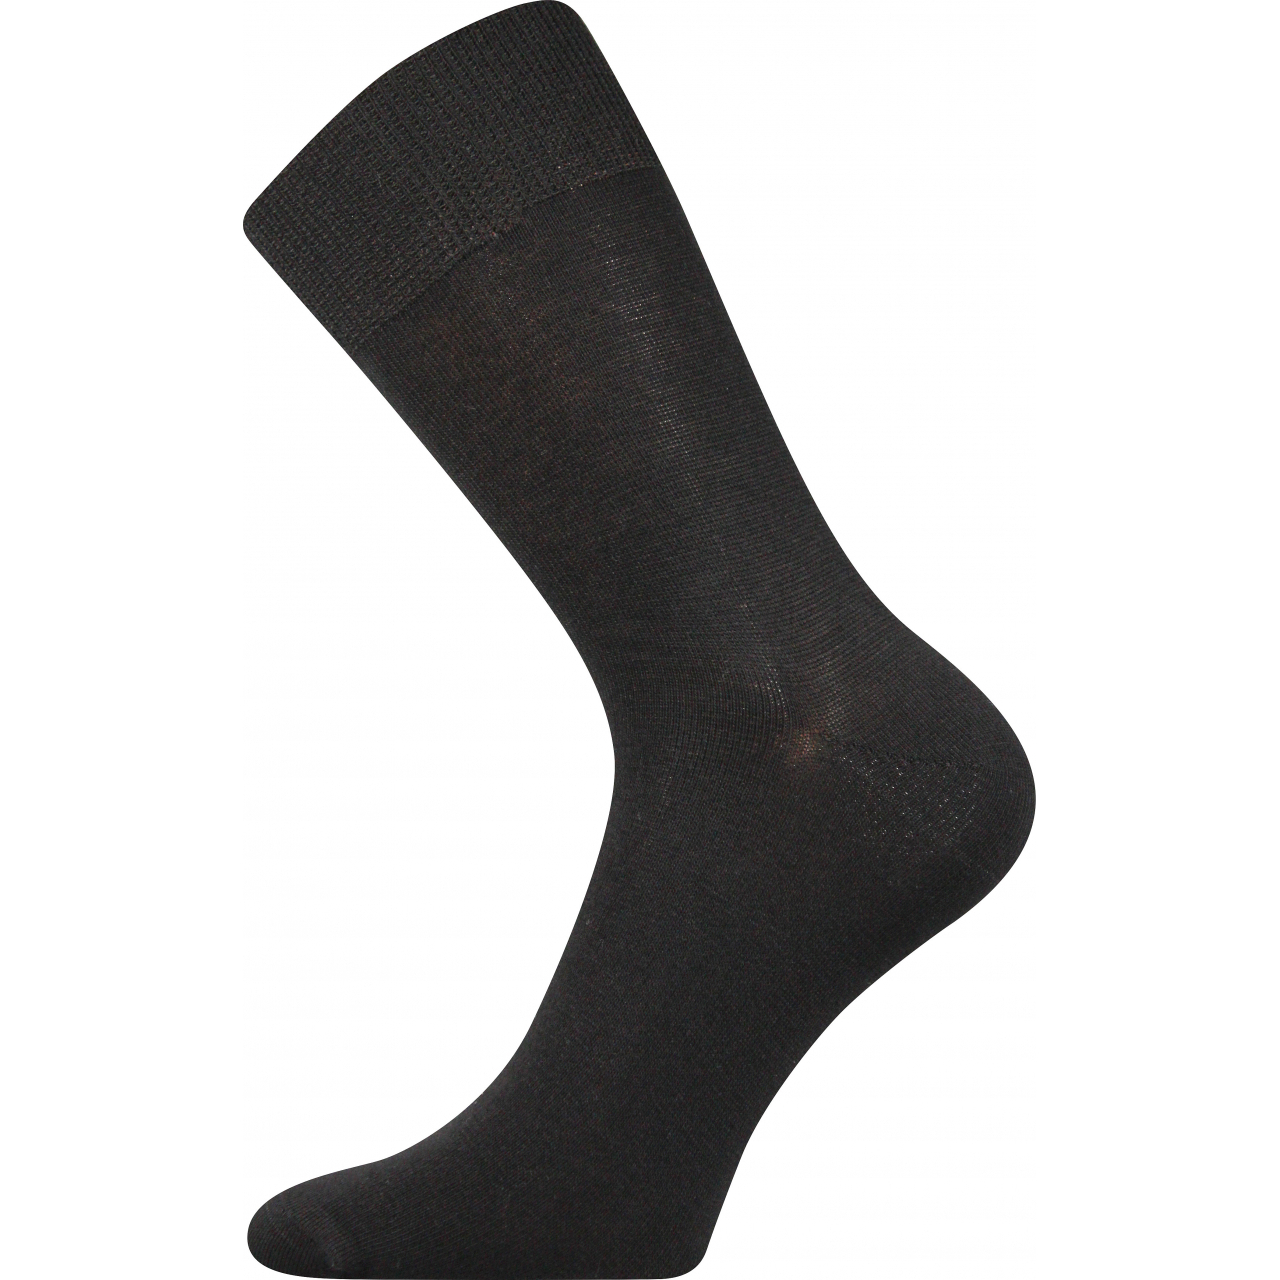 Ponožky unisex klasické Boma Radovan-a - černé, 35-38